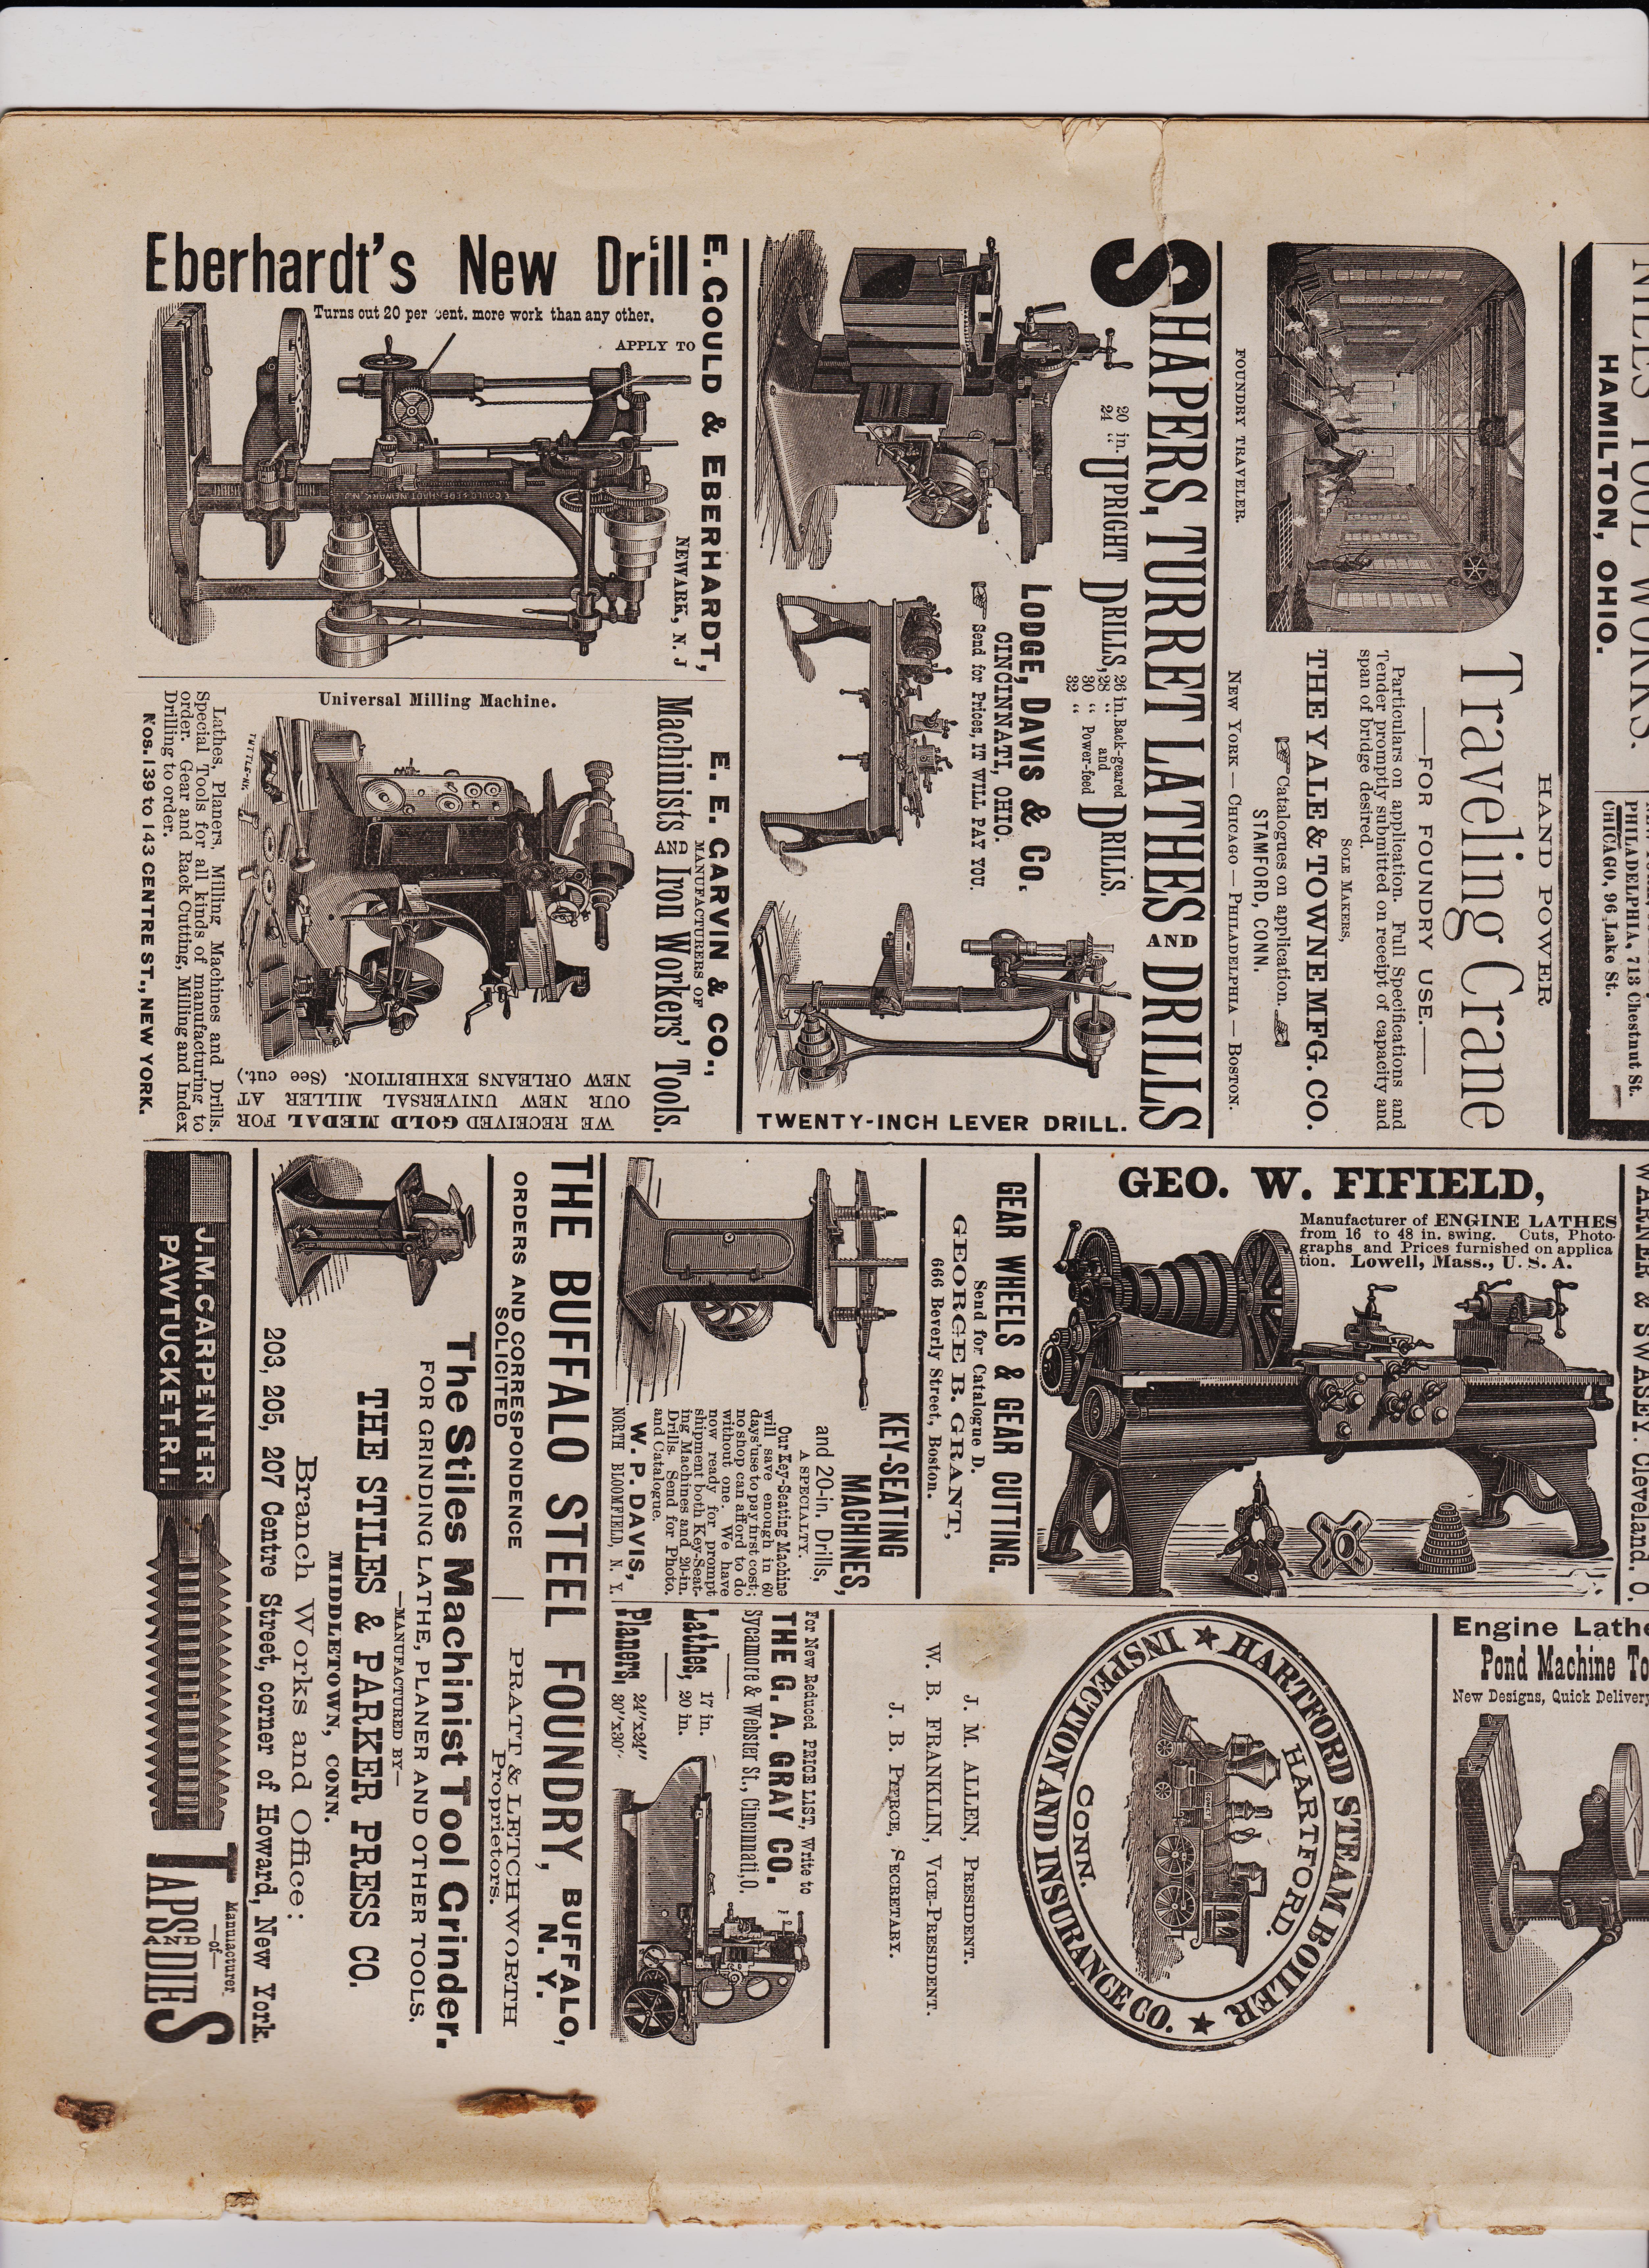 https://antiquemachinery.com/images-American-Machinist-Feb-12-1887/American-Machinist-Feb-12-1887-pg-16-bot-Lodge-and-Davis-Co-Key-SeatDrill-lathe-Drills-Grey-Planer-Geo-W-Fifield-lathe-Grant-Gear-Wheels-E-E-Garvin-Horizontal-Milling-Machine-Eberhardt-Drill-Press-Styles-and-Parker.jpeg